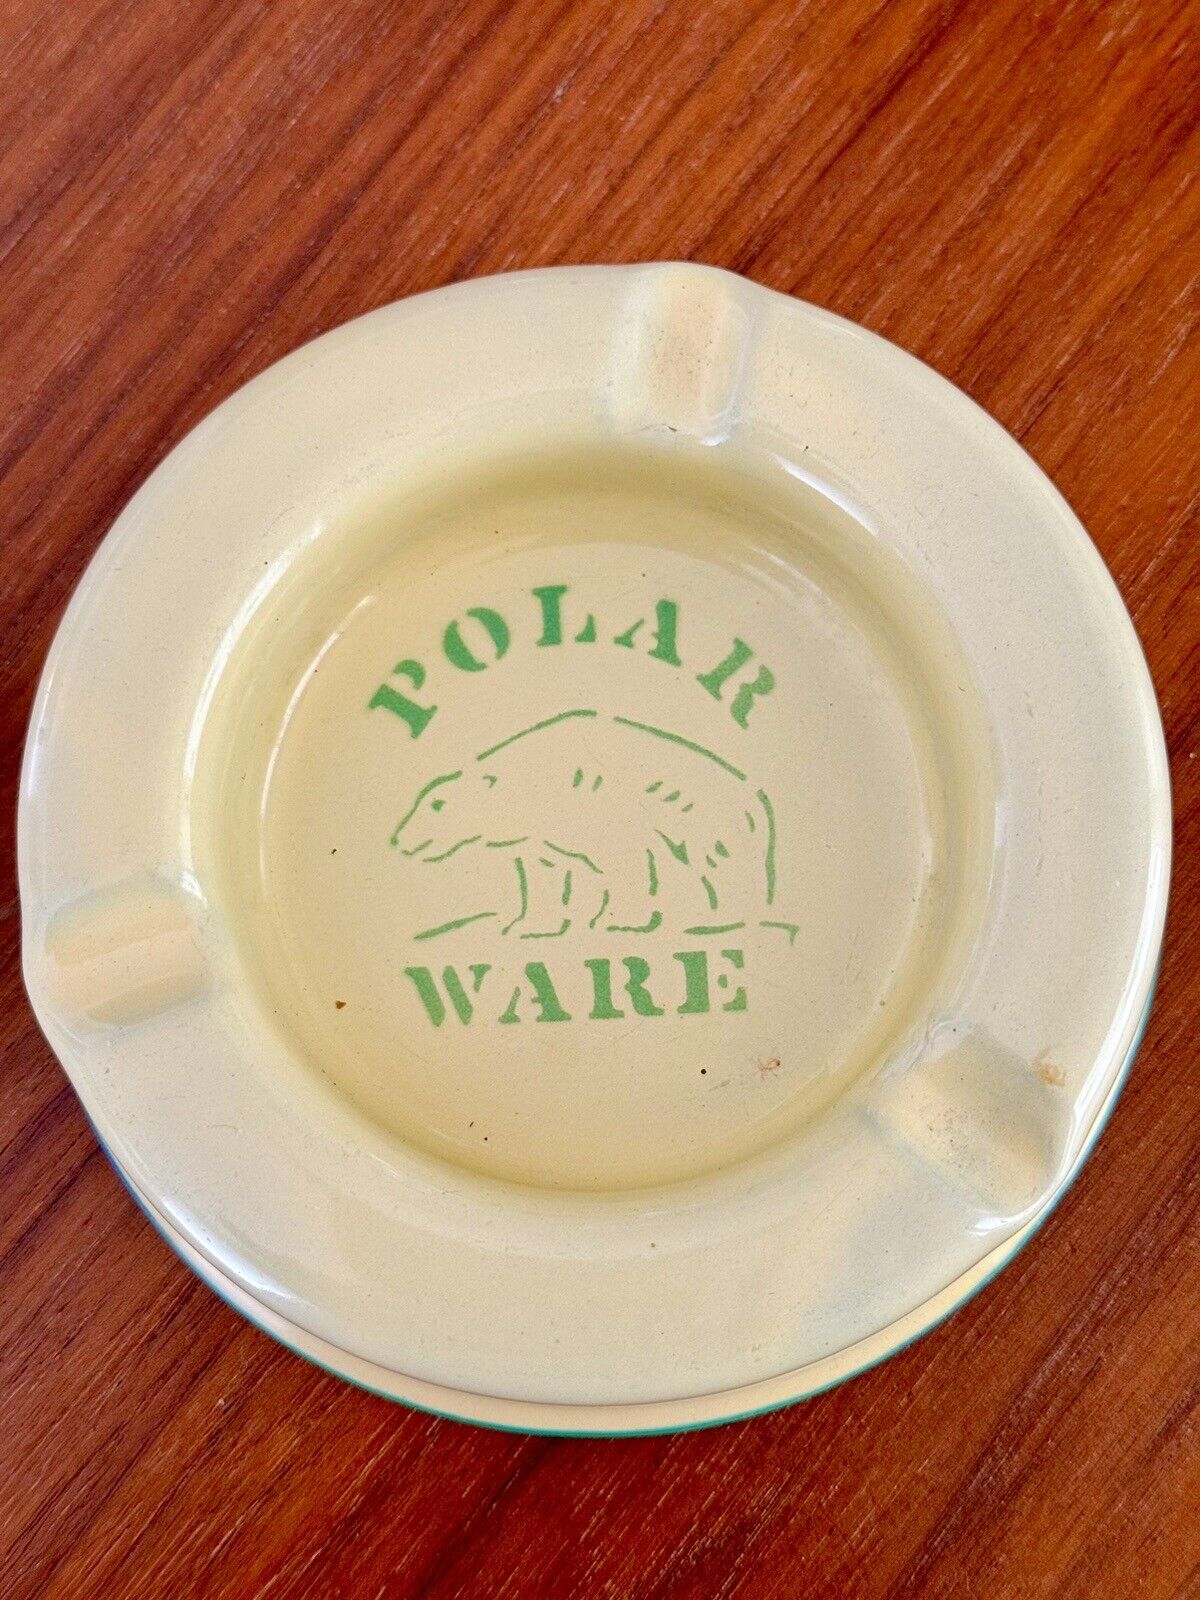 1940’s Polar Ware Vintage Advertising Enamelware Ashtray Great condition